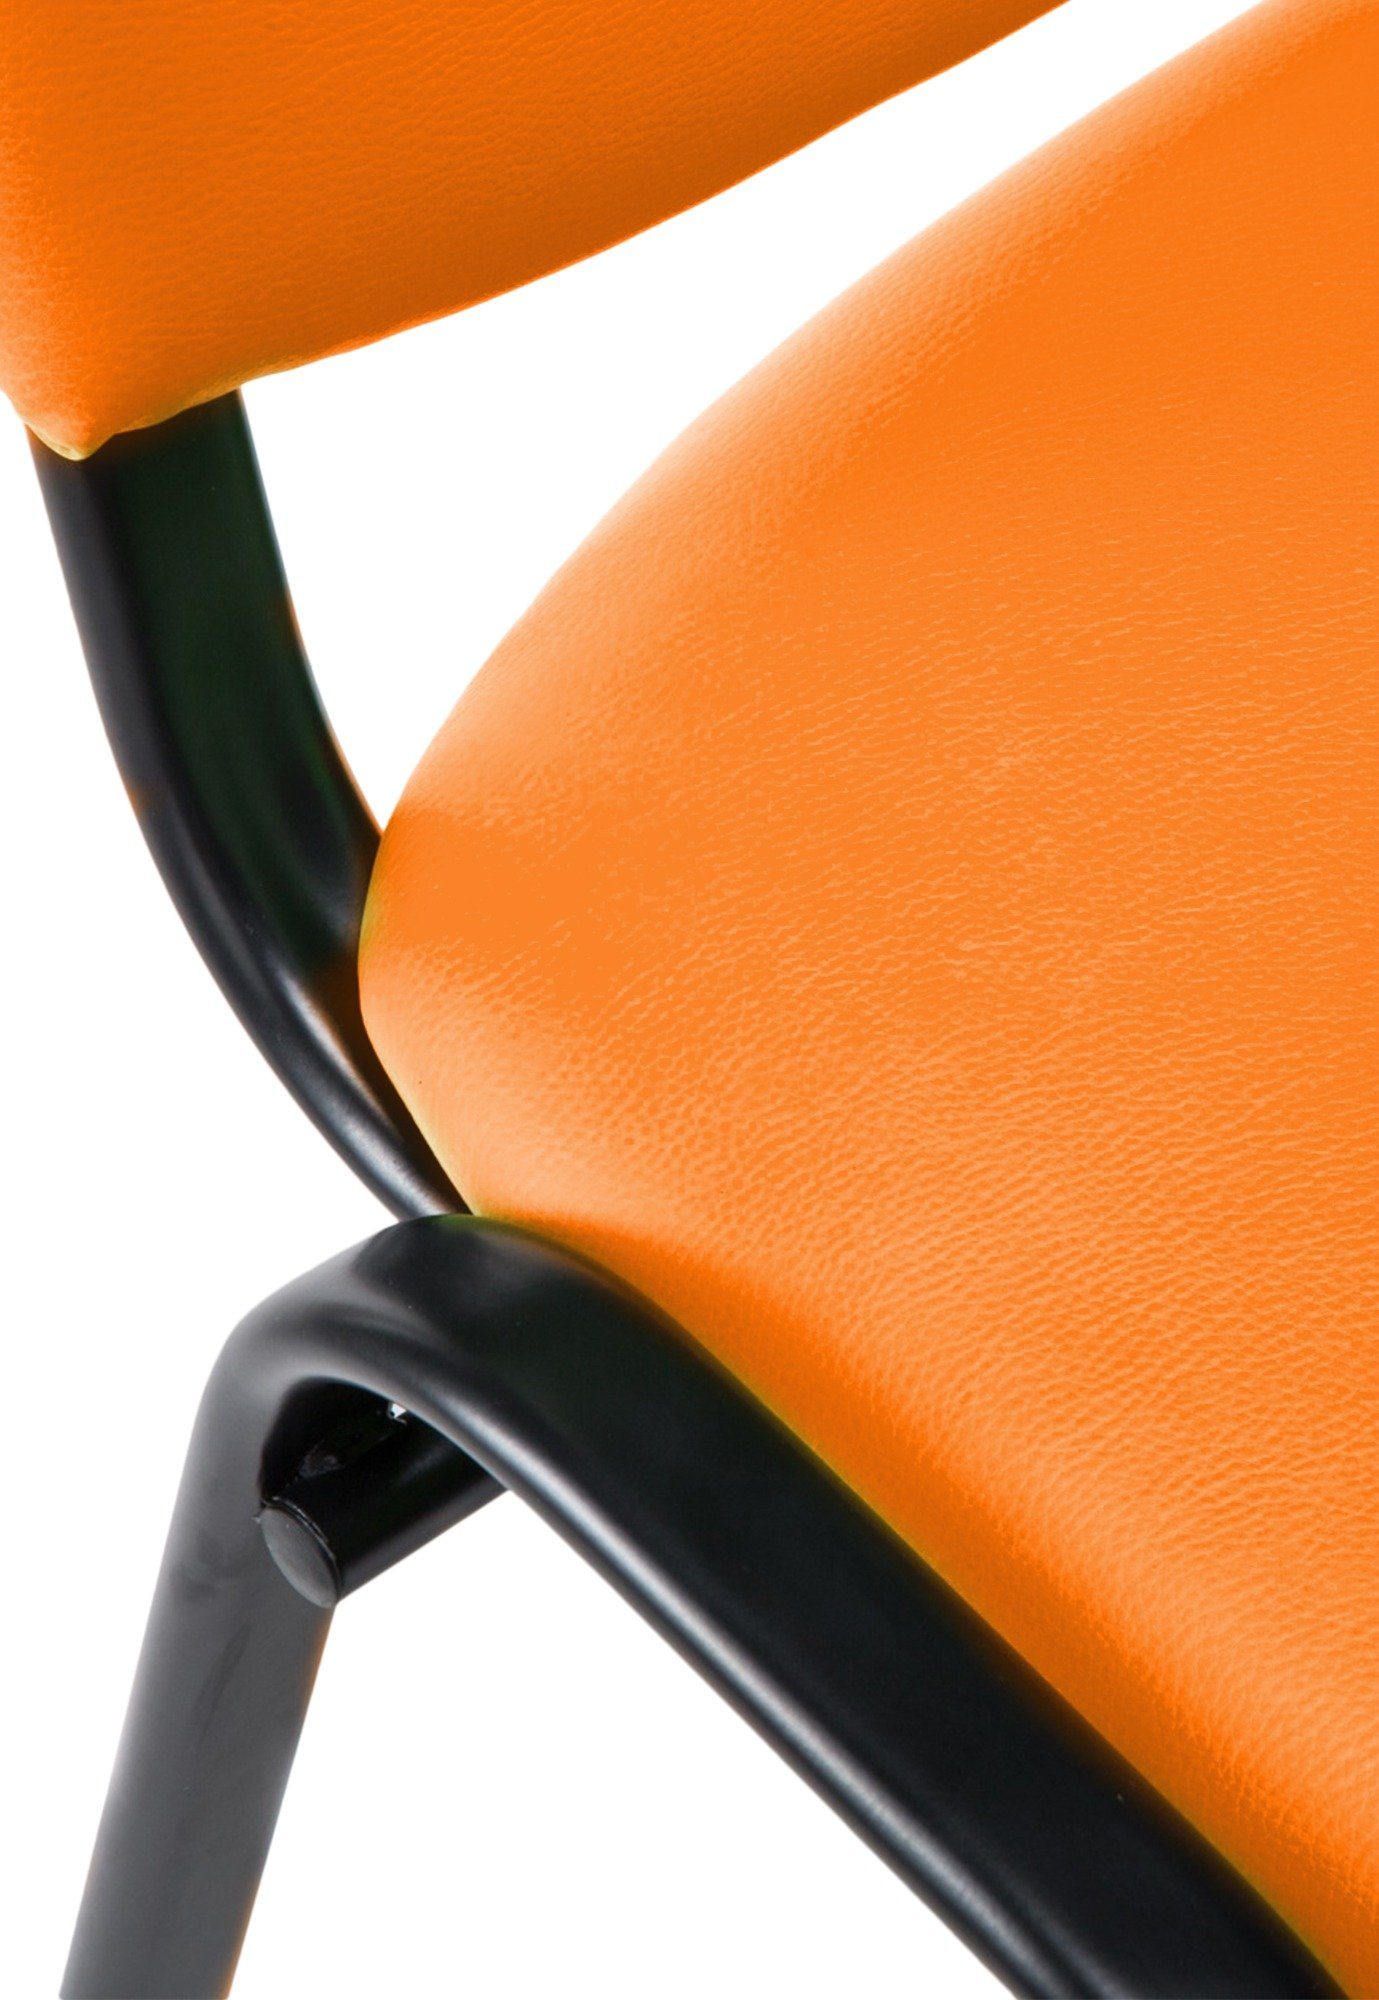 Ken, CLP Besucherstuhl orange Kunstleder-Bezug Metallgestell, stapelbares